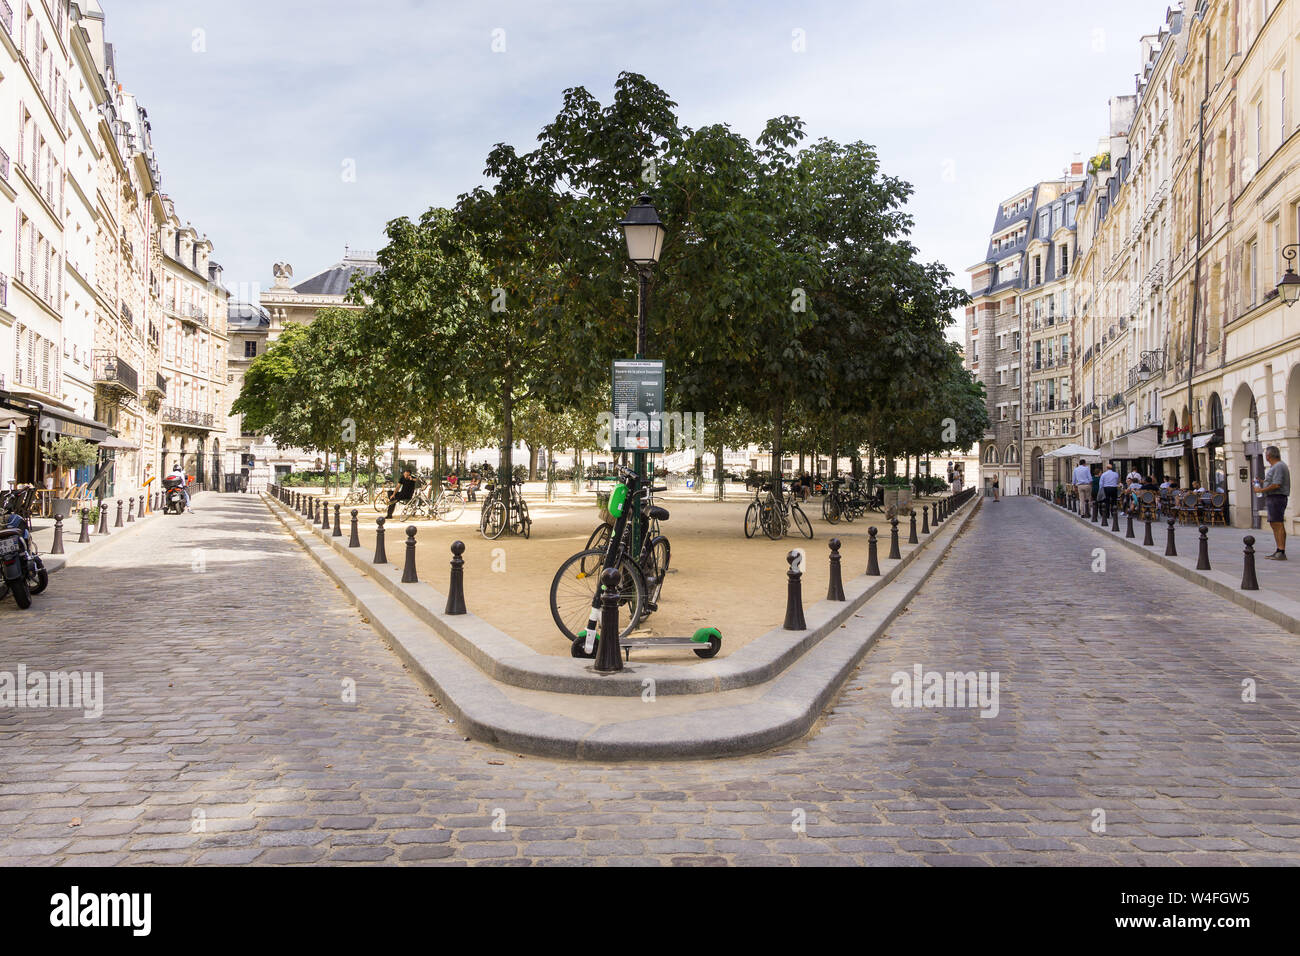 Paris Place Dauphine - Place Dauphine is a square located on Ile de la Cite in Paris, France, Europe. Stock Photo